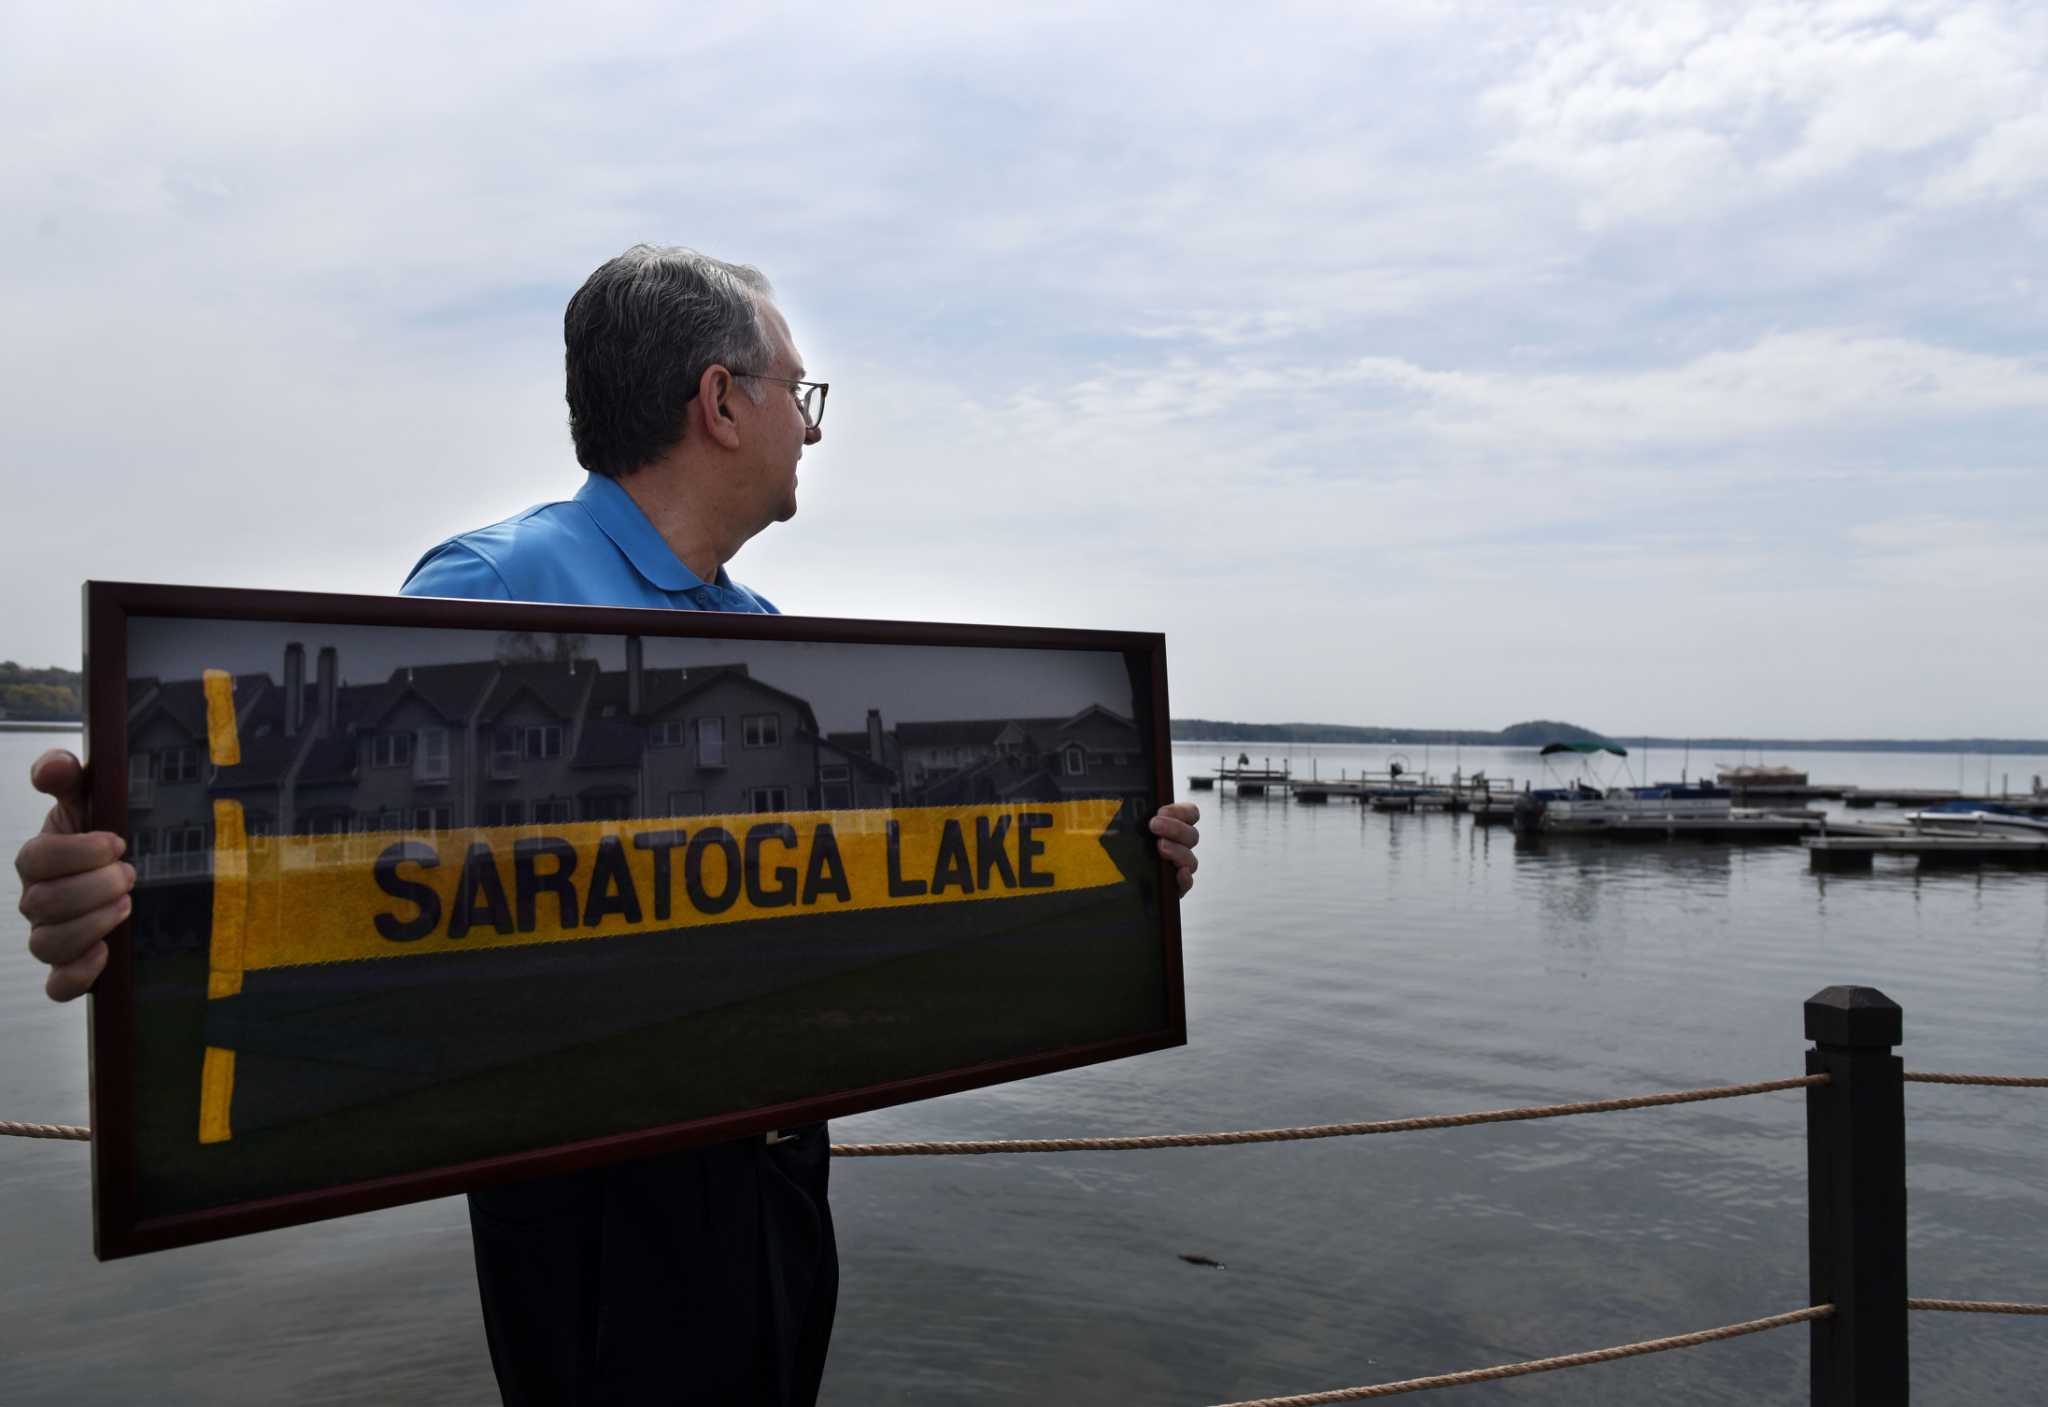 Change comes to Saratoga Lake's shores